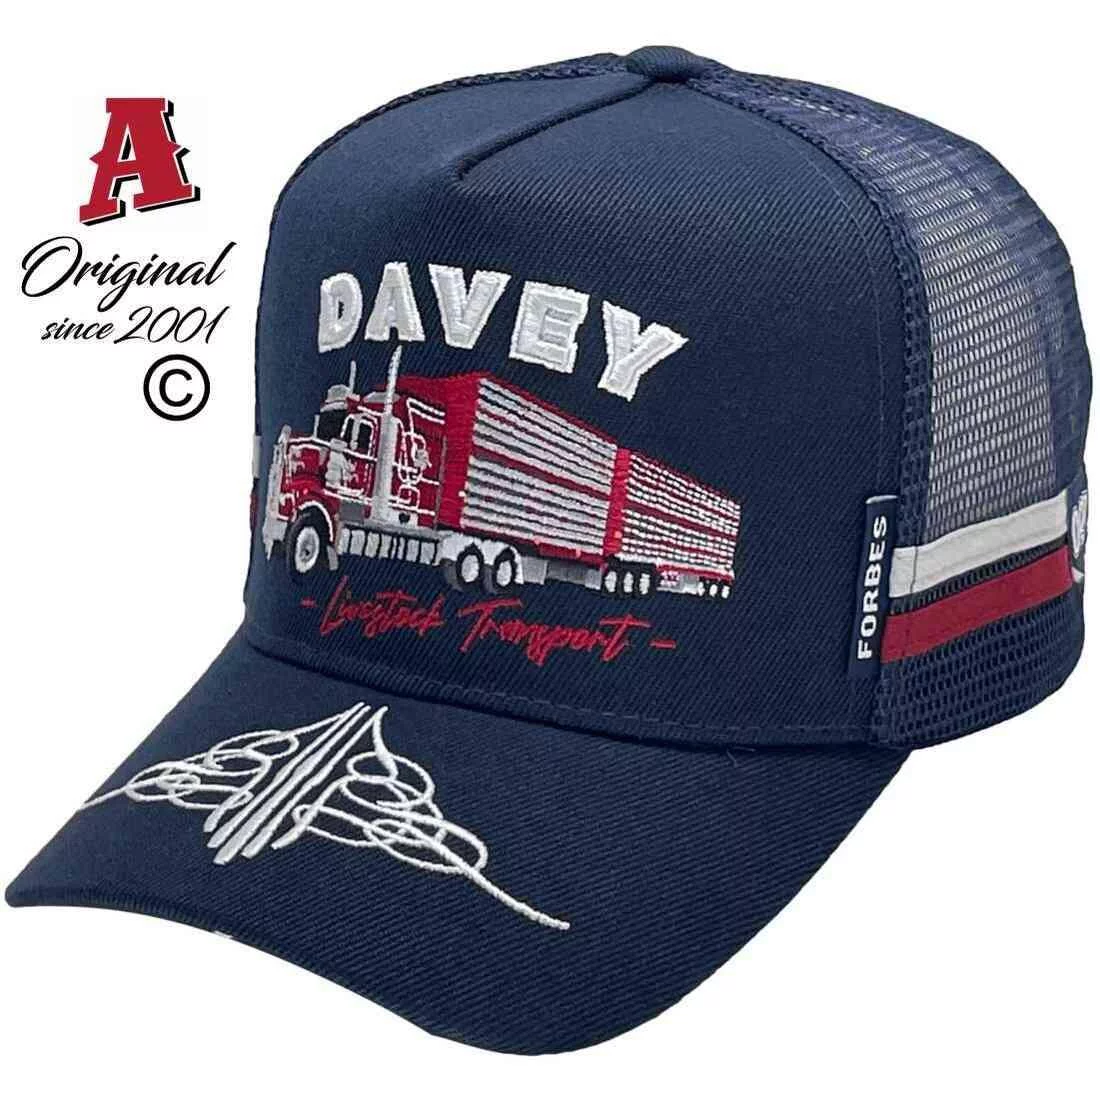 Davey Livestock Transport Forbes NSW Power Aussie Trucker Hats HP with Double Sidebands & Australian HeadFit Crown Navy Burgundy Silver